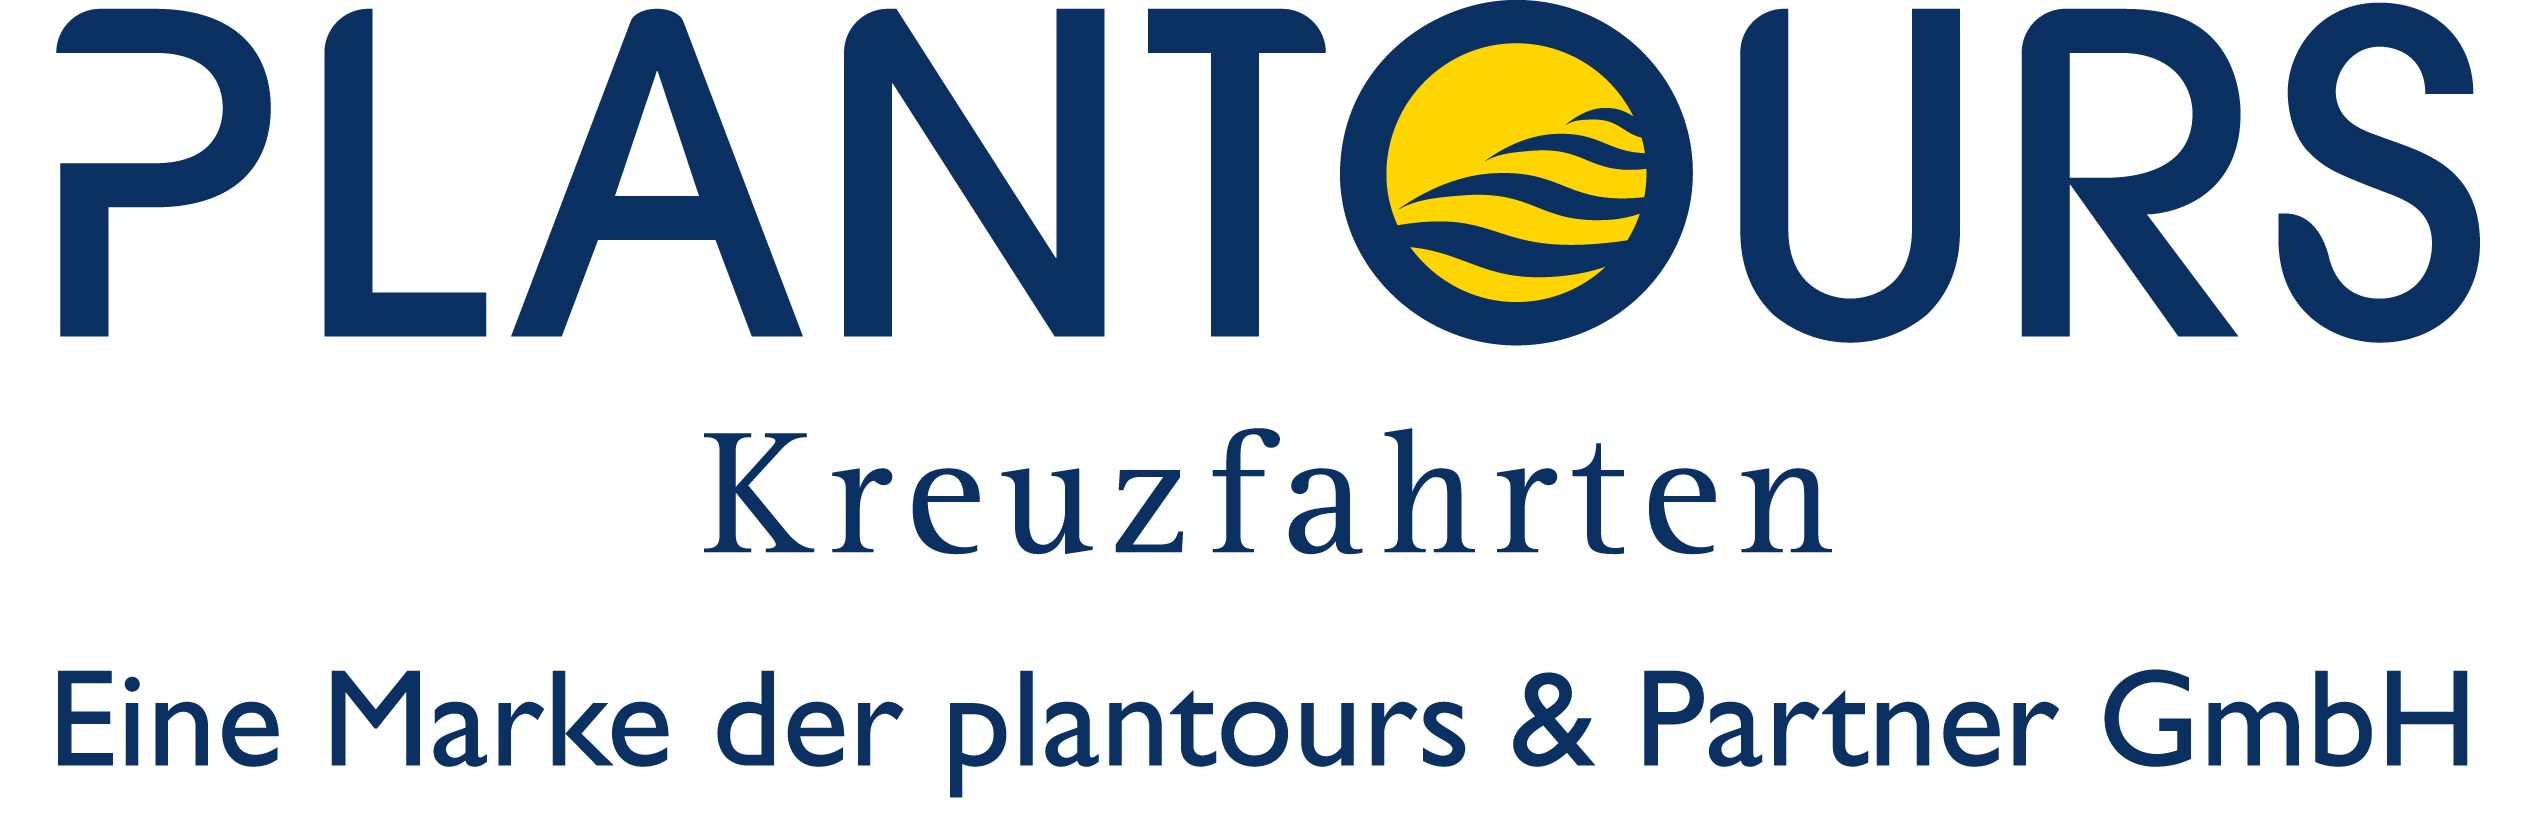 logo_plantours_kreuzfahrten_4c